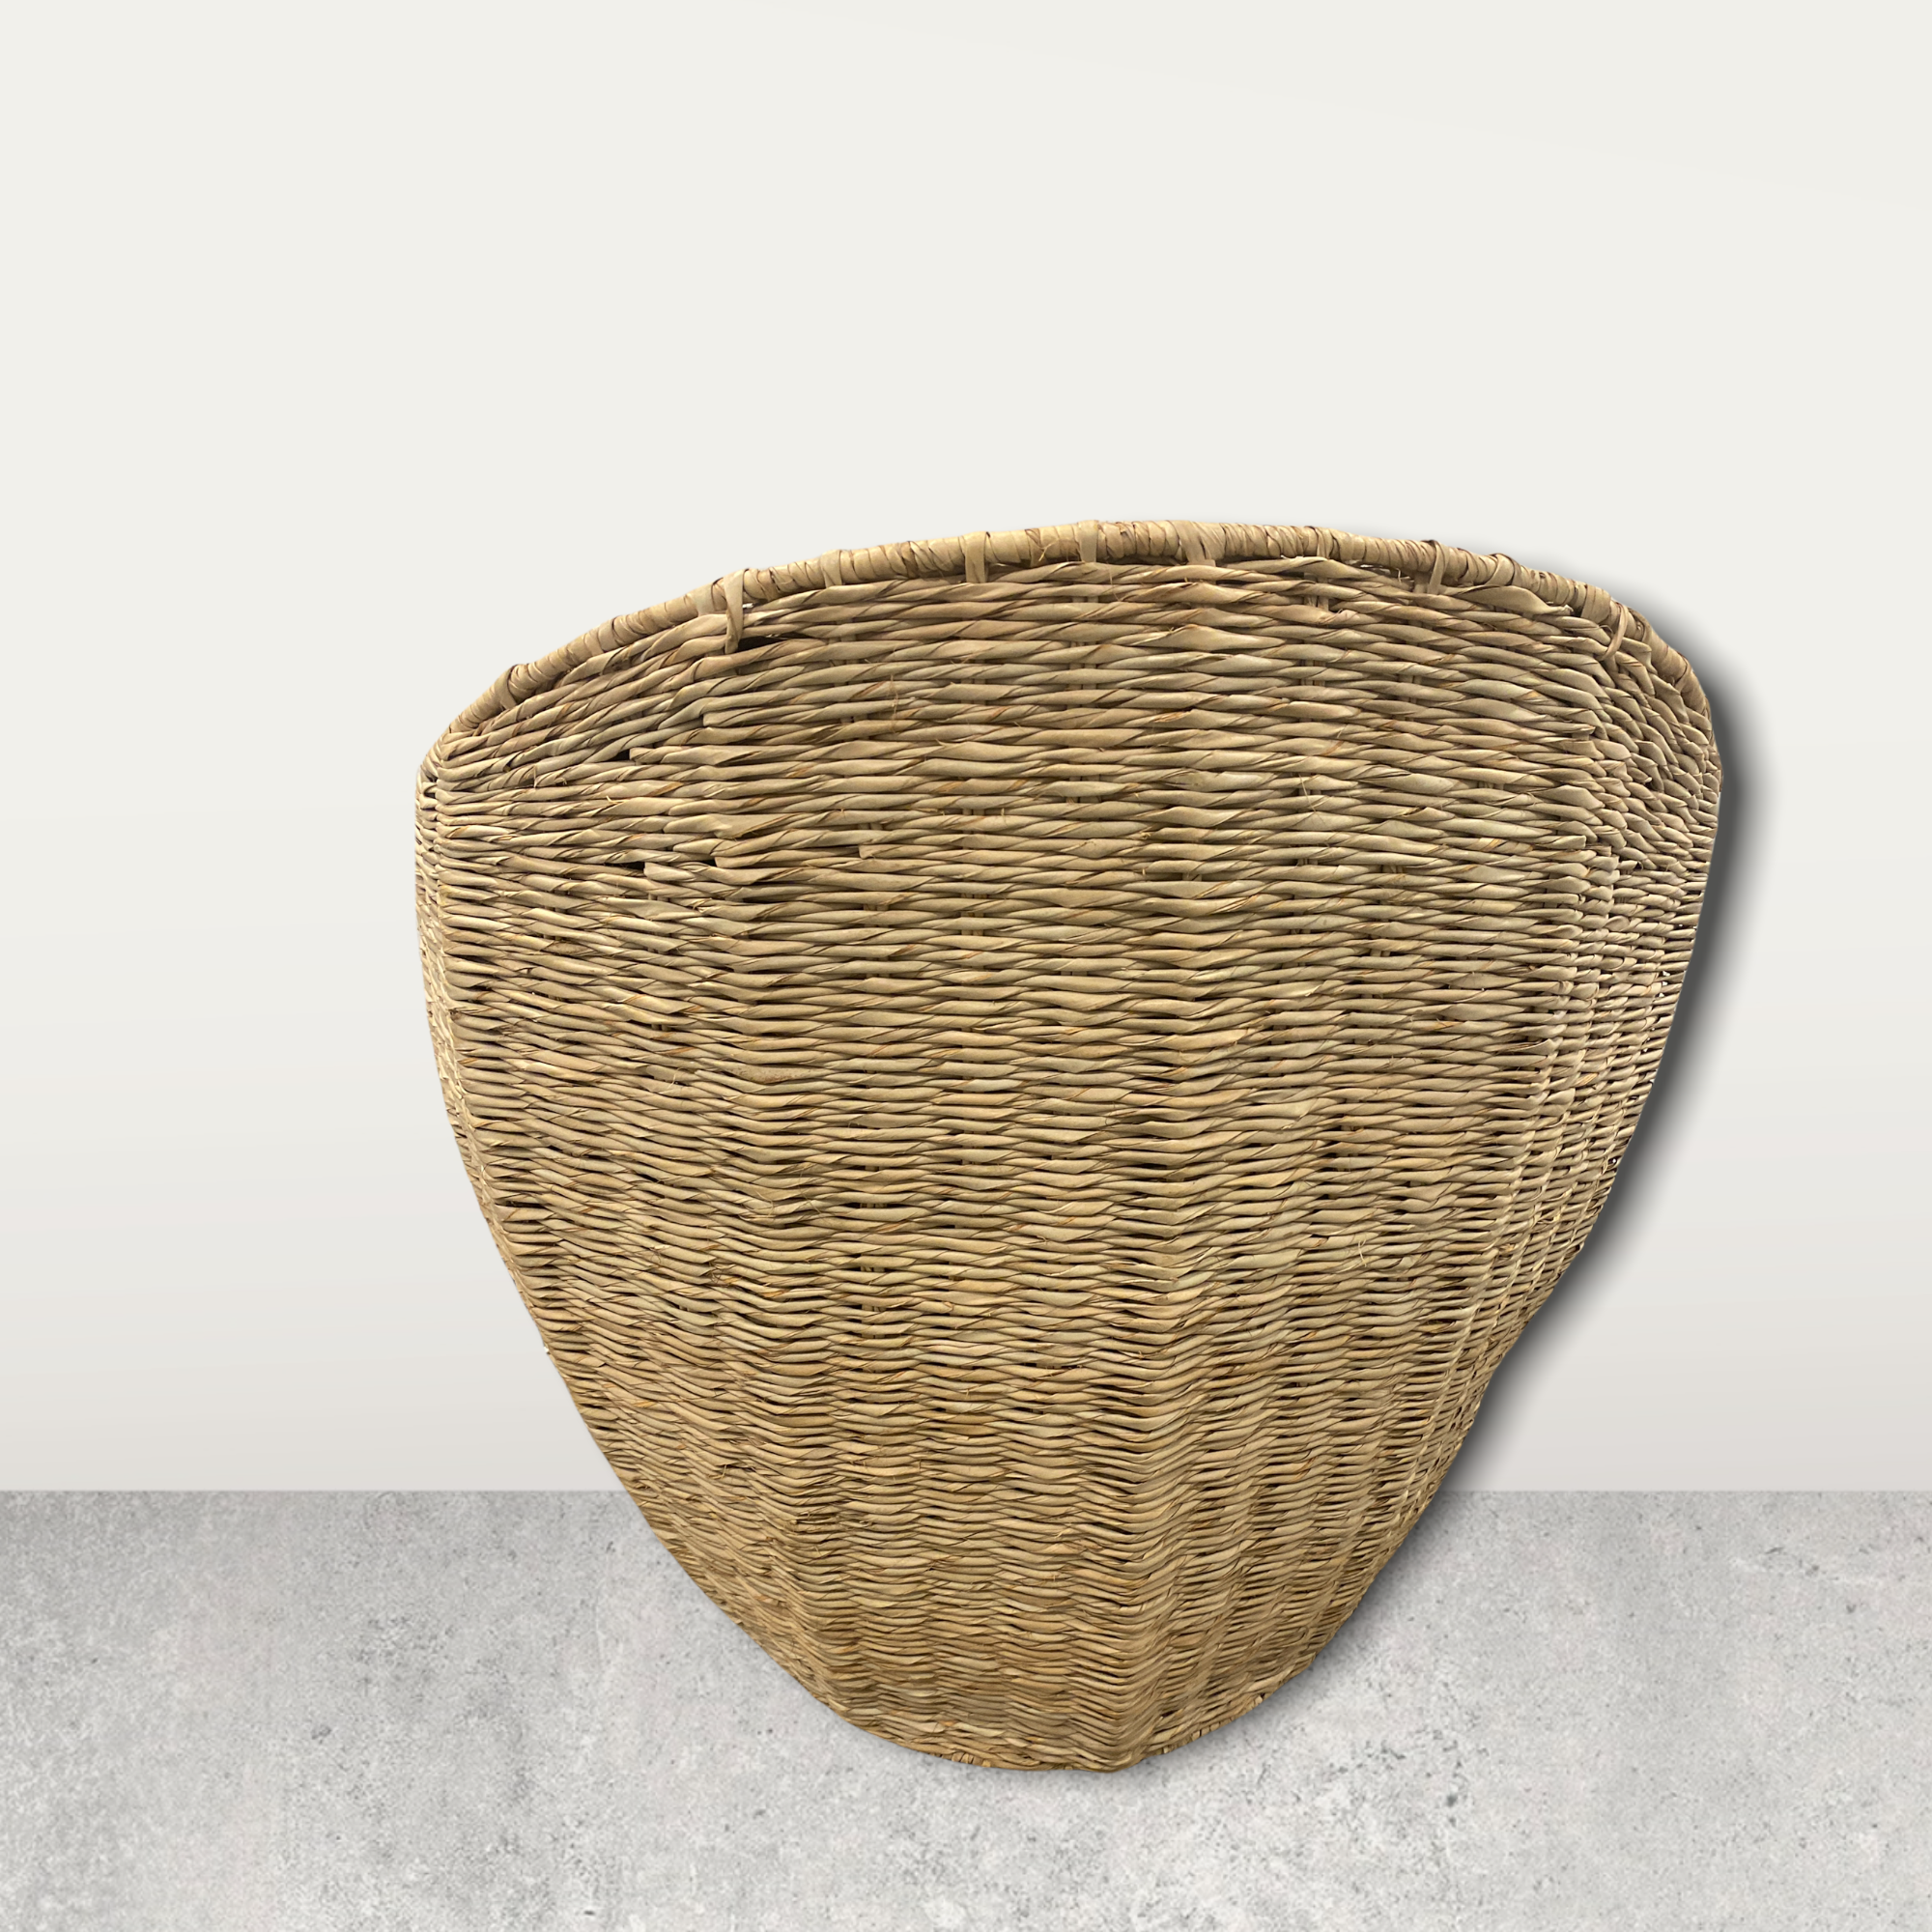 Handwoven Palm Leaf chair - Mozambique